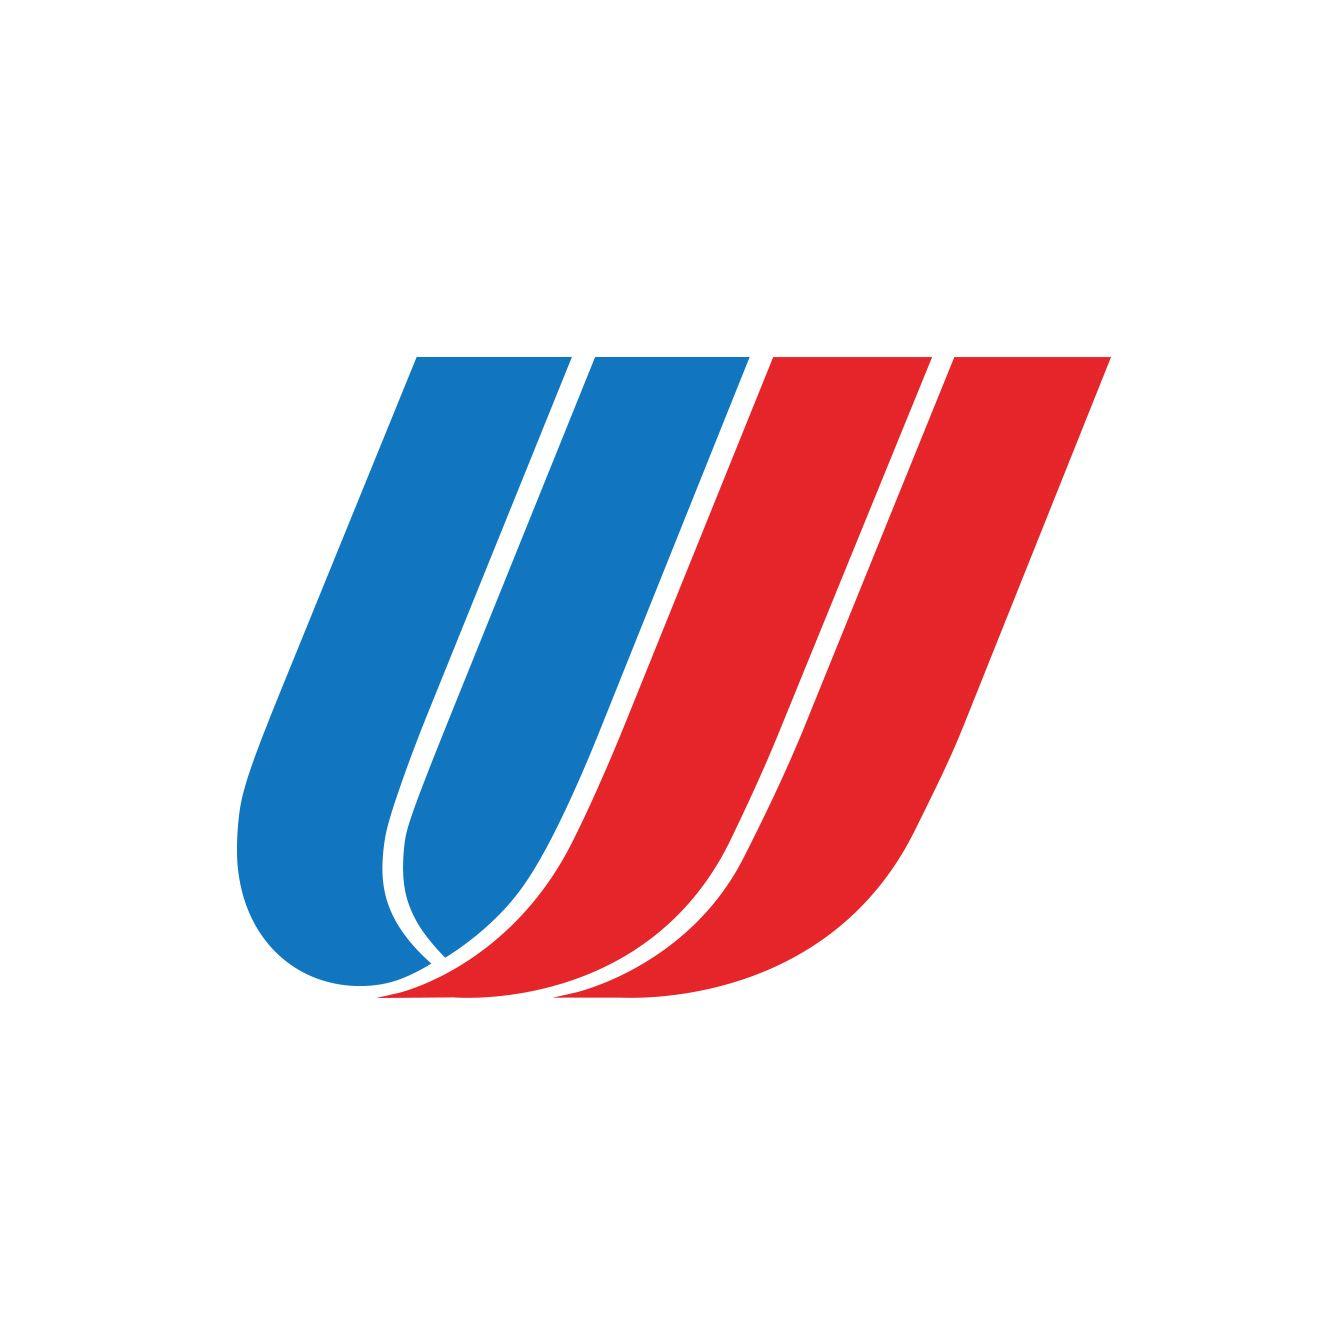 United Airlines Tulip 1974 Logo - United Airlines 